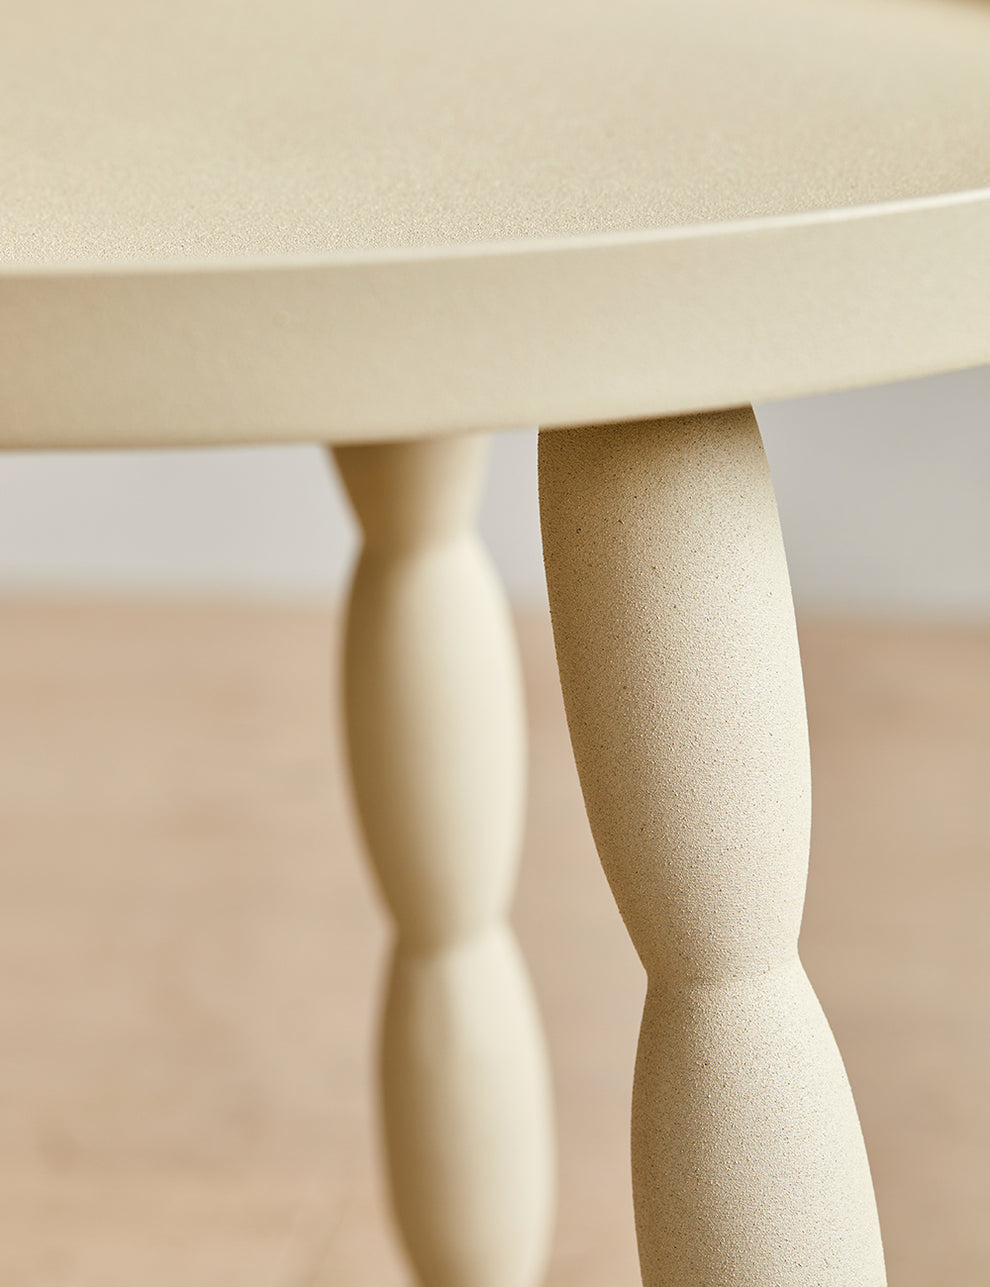 White Marshmallow Leg Side Table